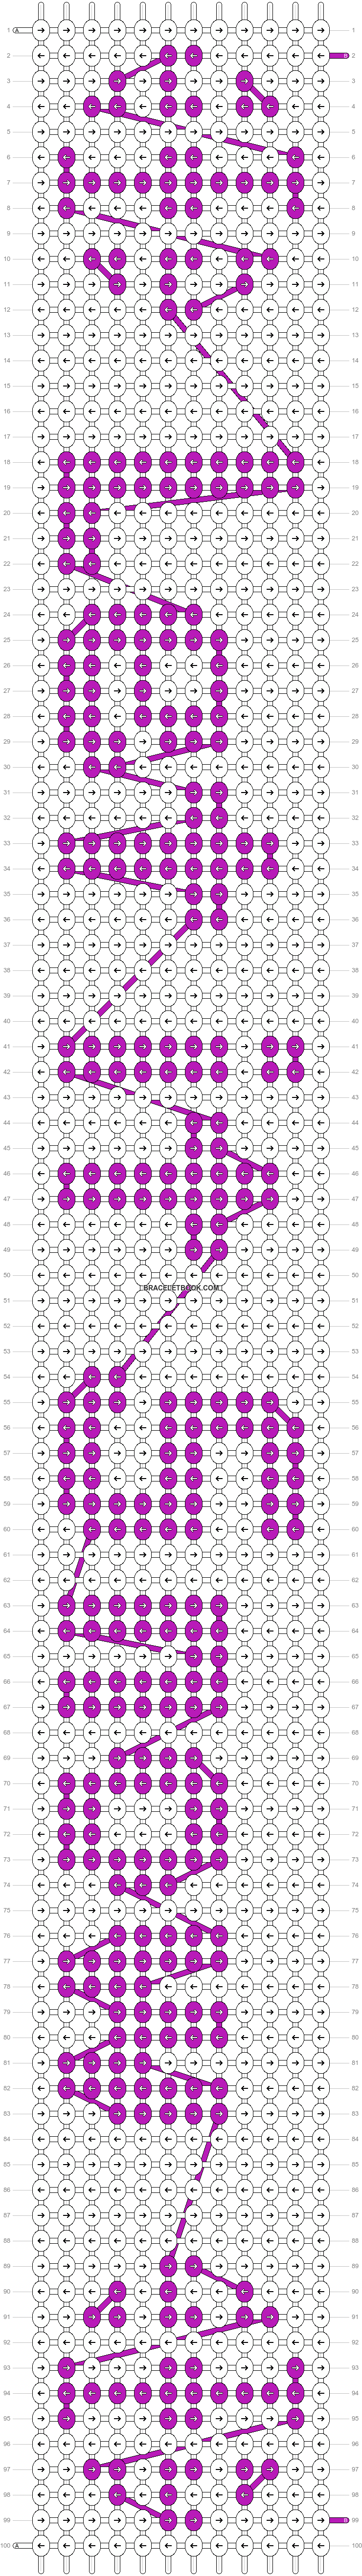 Alpha pattern #27311 variation #11029 pattern